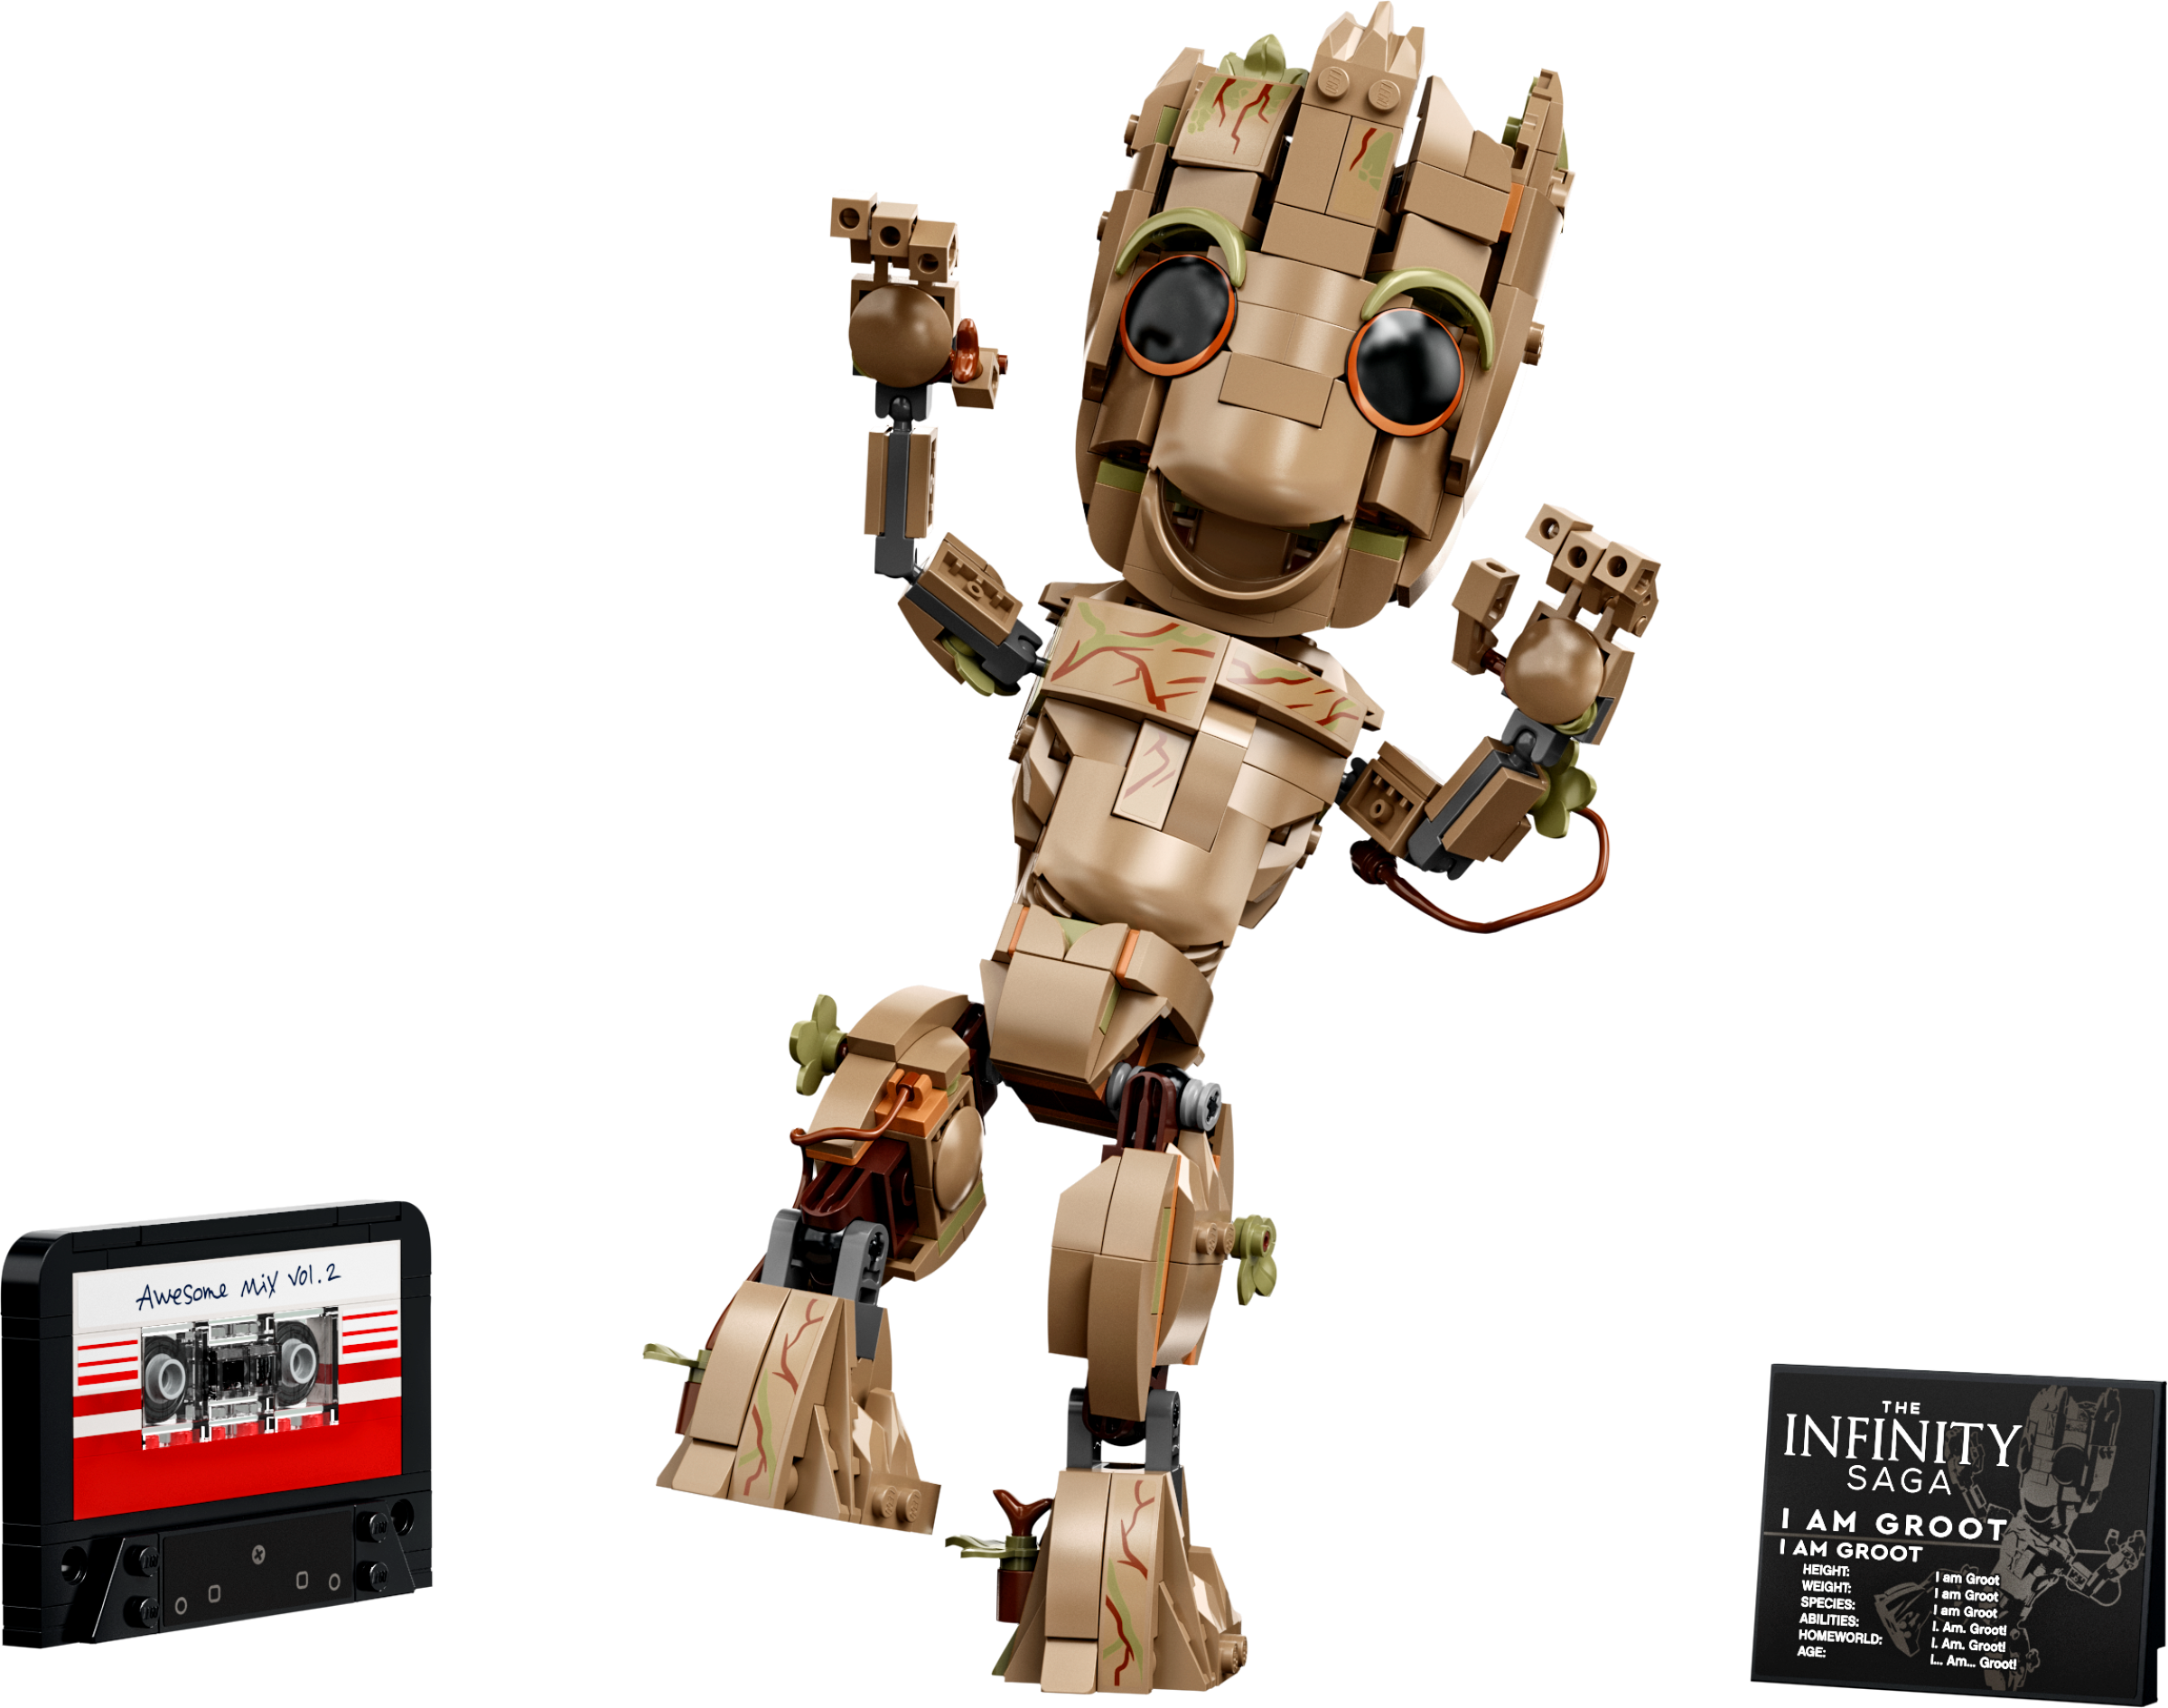 LEGO® sh743 Groot, Teen Groot - Dark Tan - ToyPro